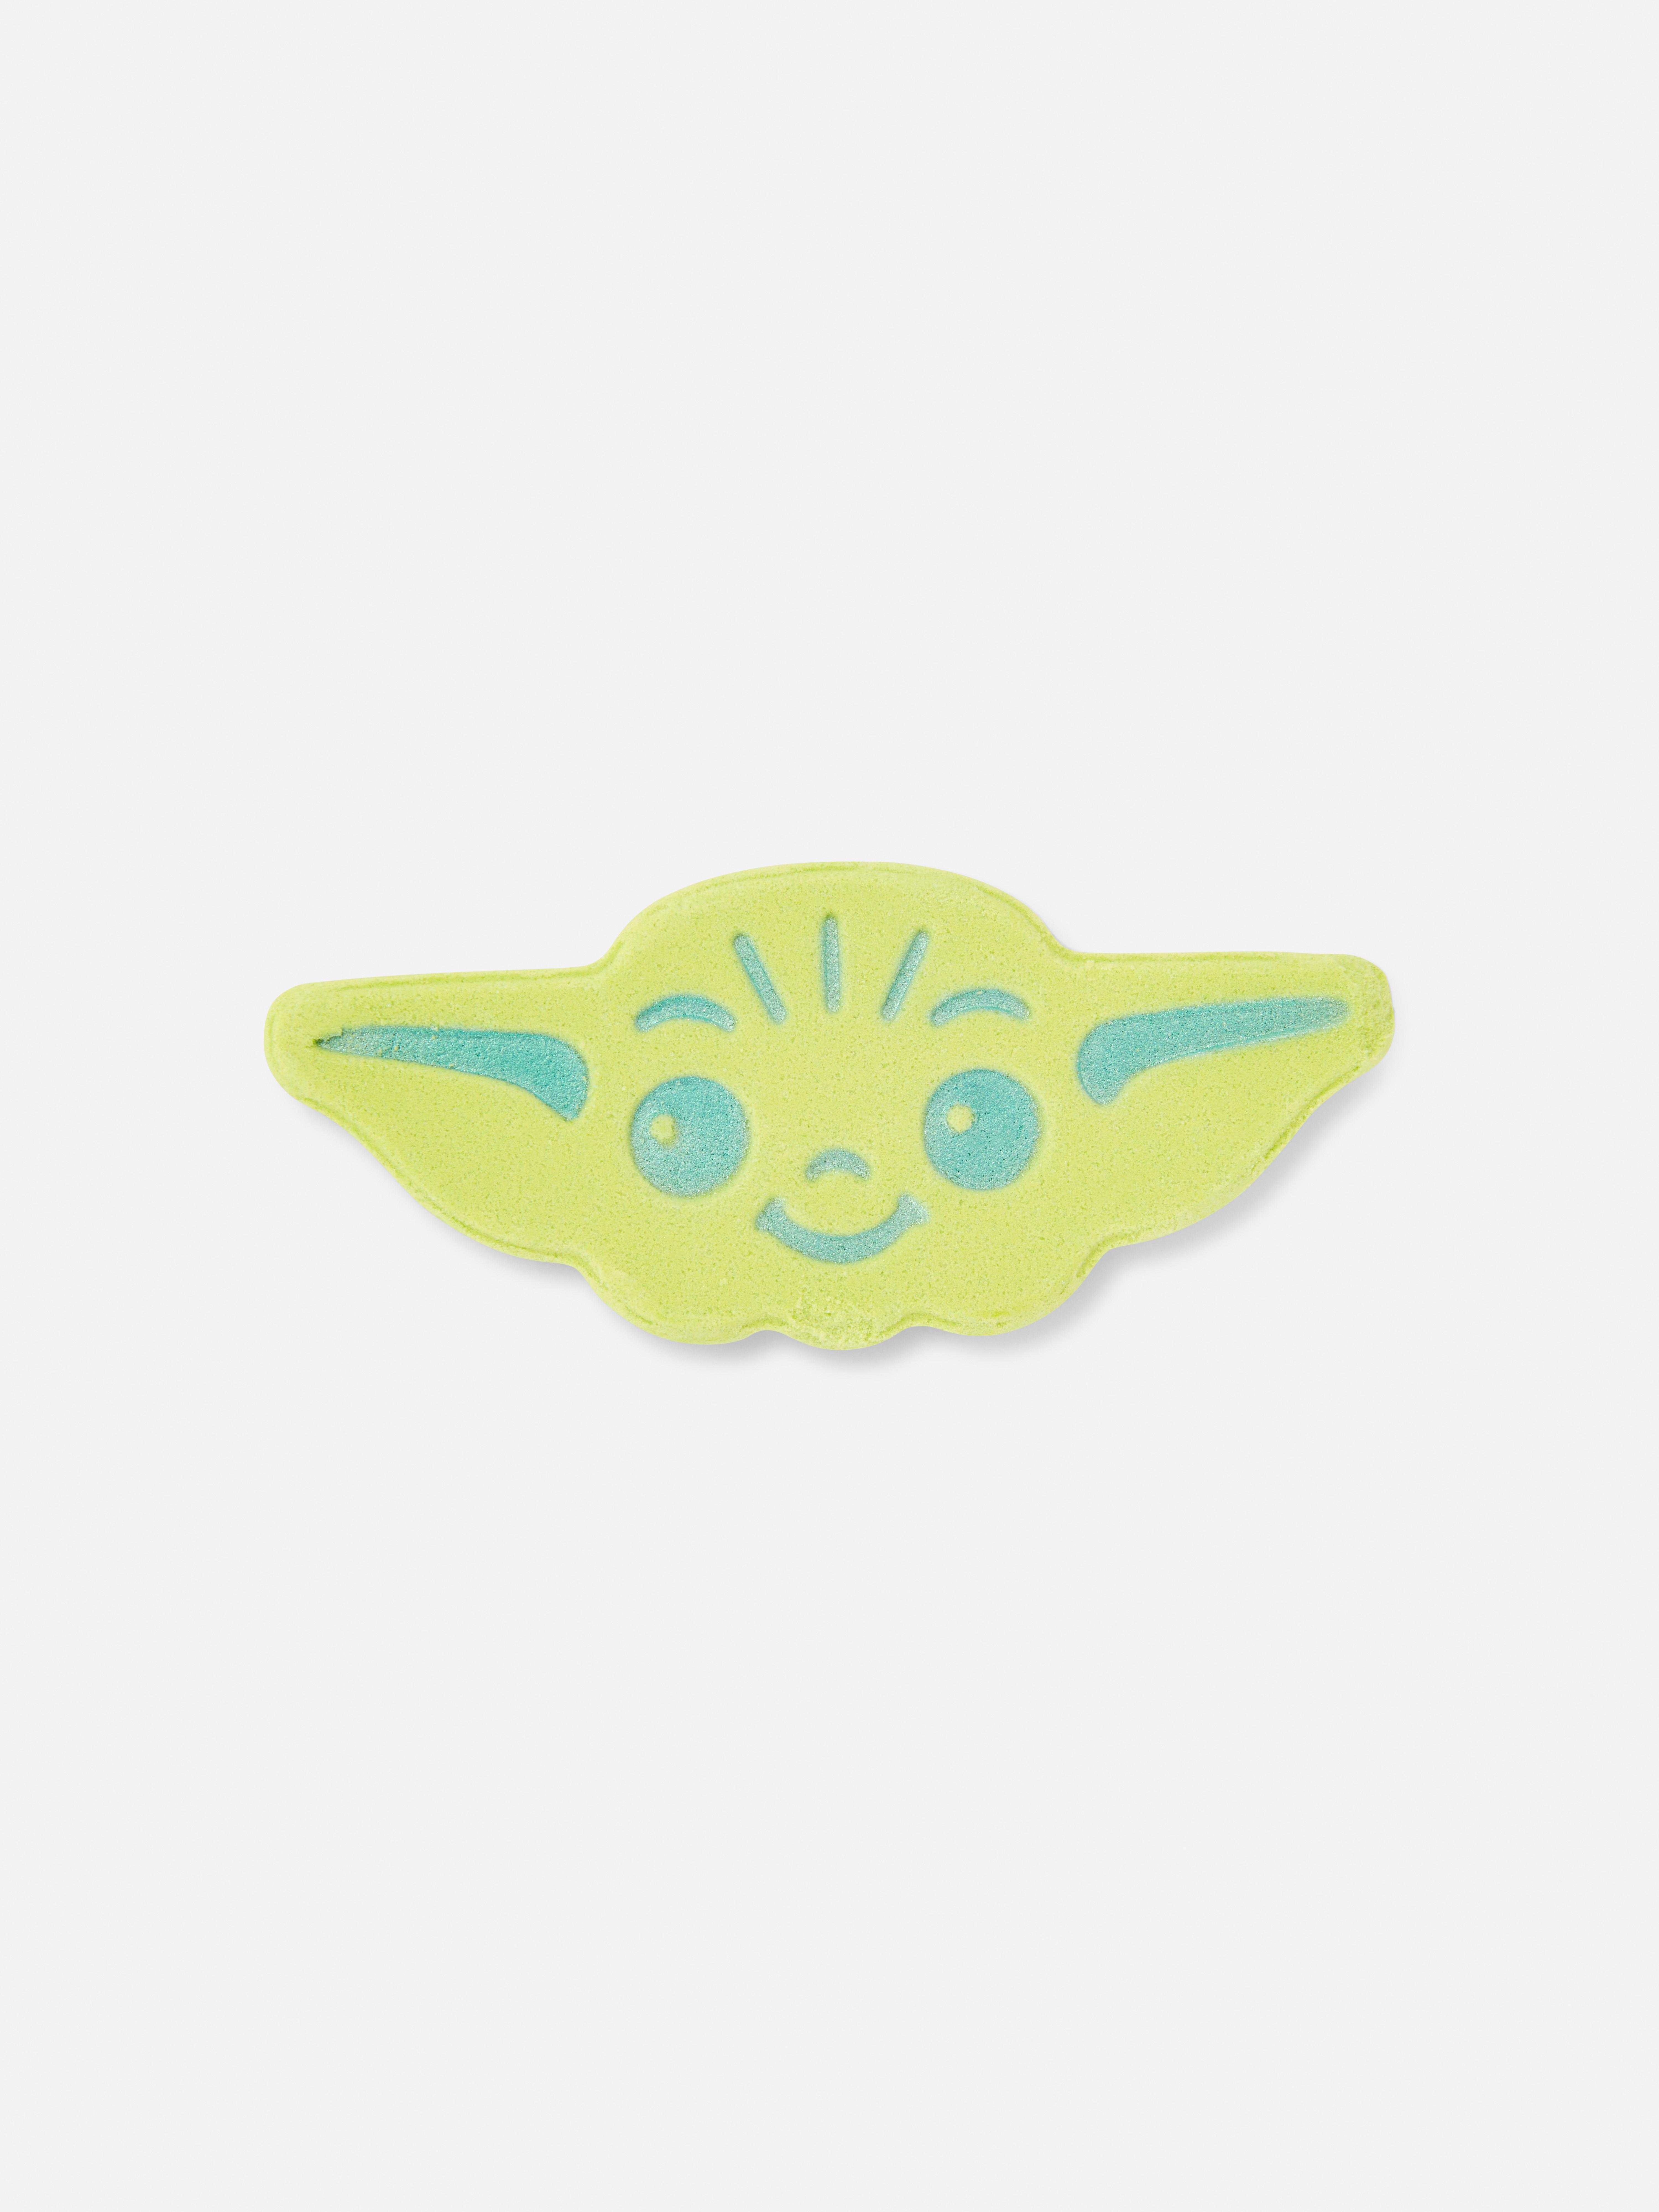 „Star Wars Baby Yoda“ Badebombe